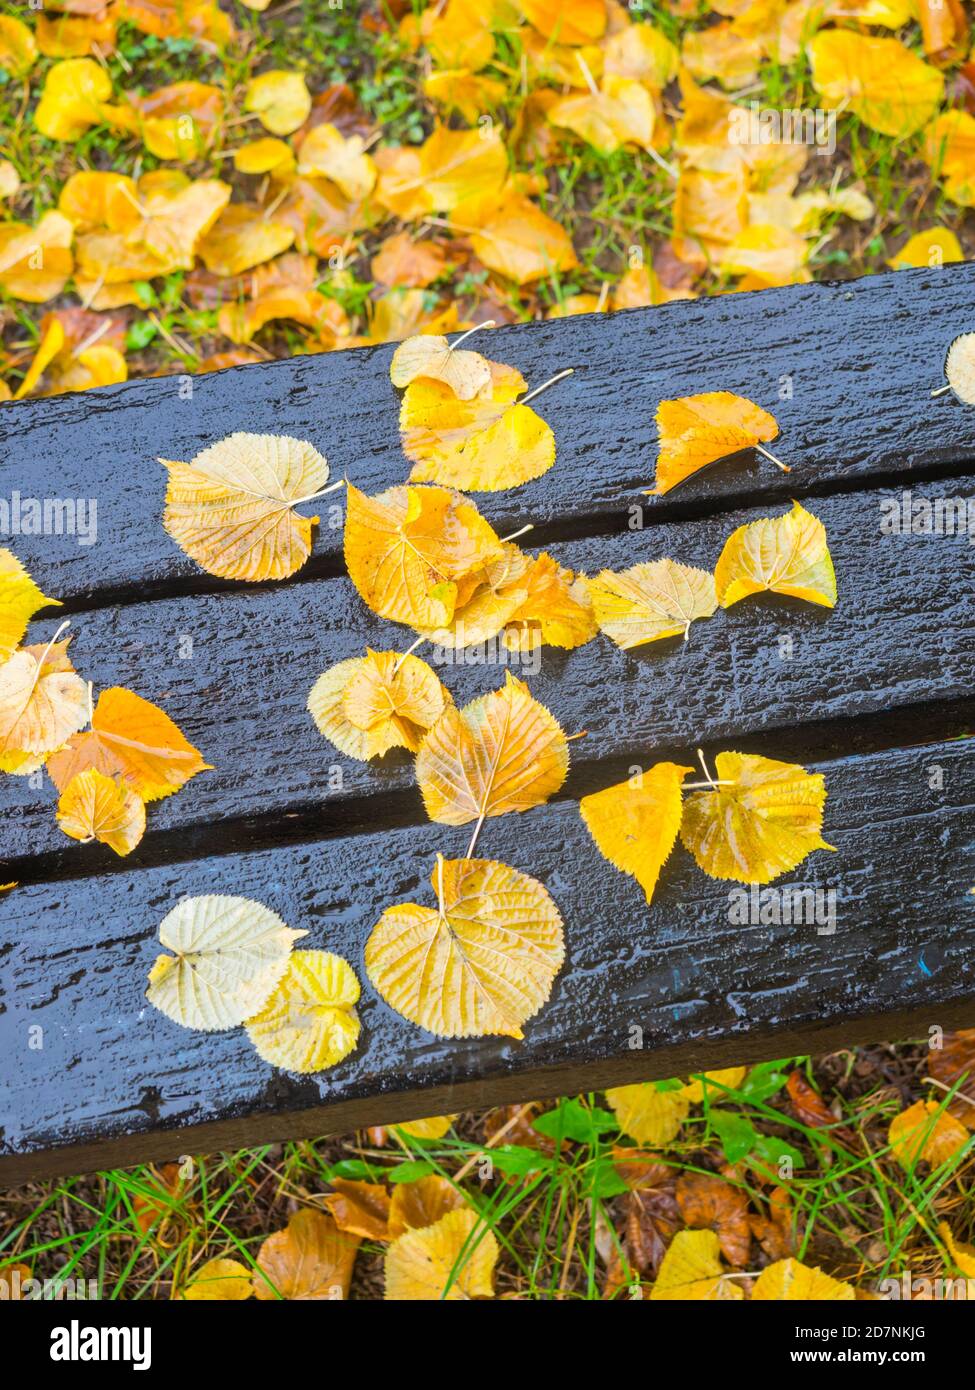 Fallen leaves on wooden bench in park Autumnal Autumn Fall season Stock Photo